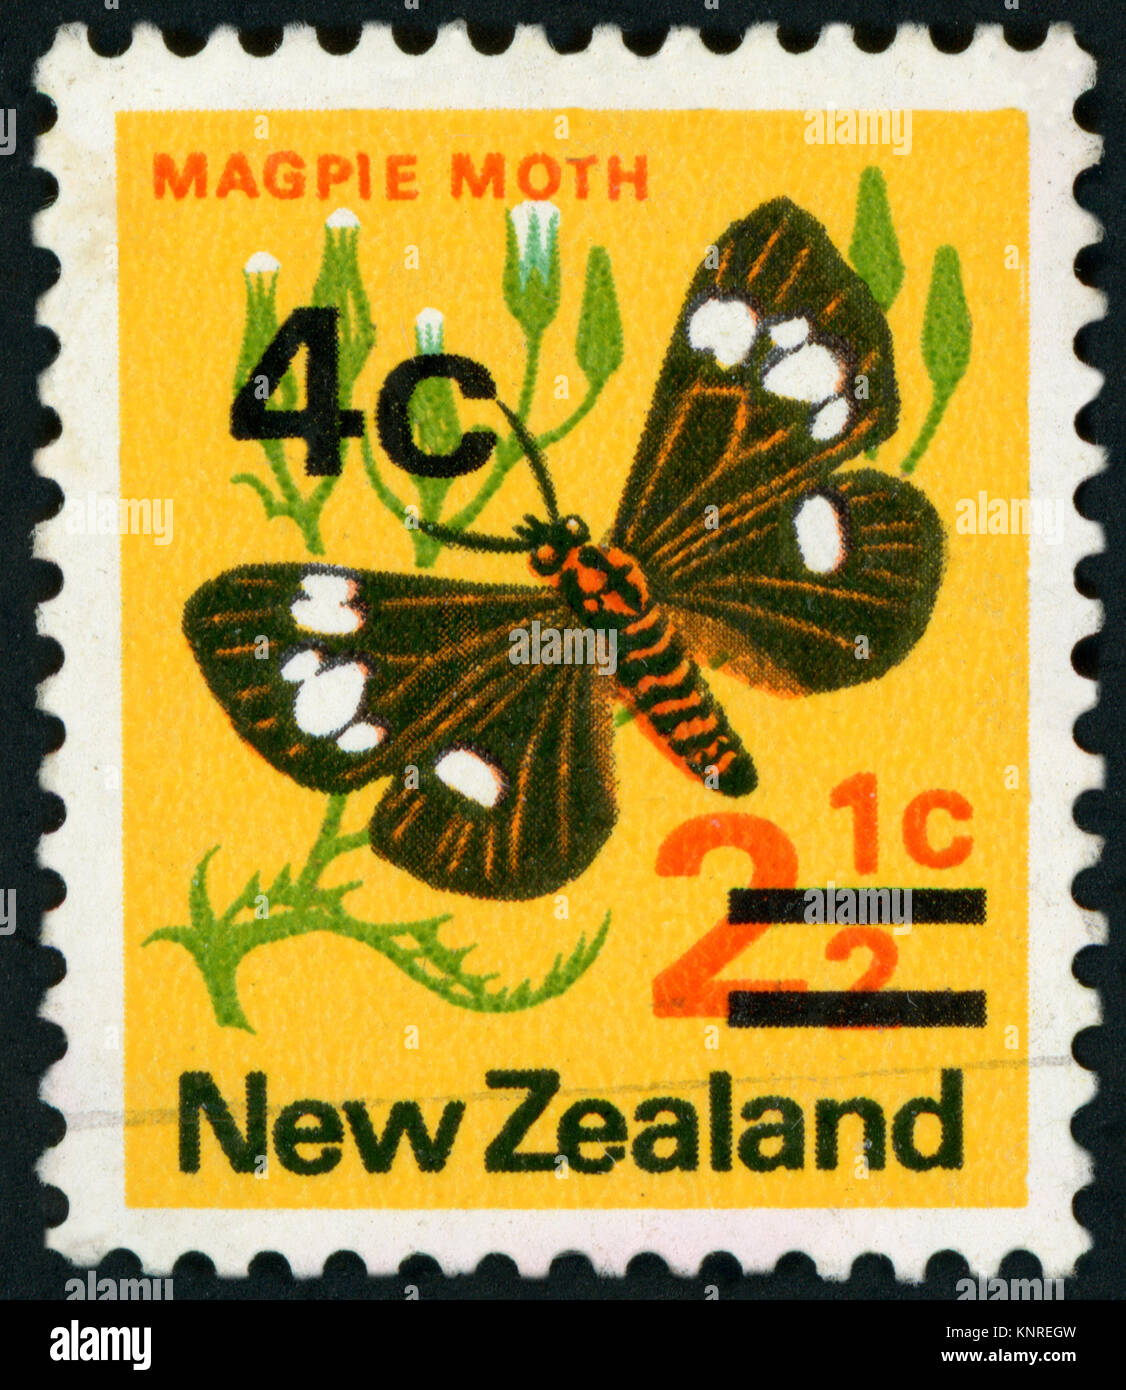 NEW ZEALAND - CIRCA 1970: A stamp printed in New Zealand shows Magpie moth (Eurrhypara hortulata), circa 1970 Stock Photo